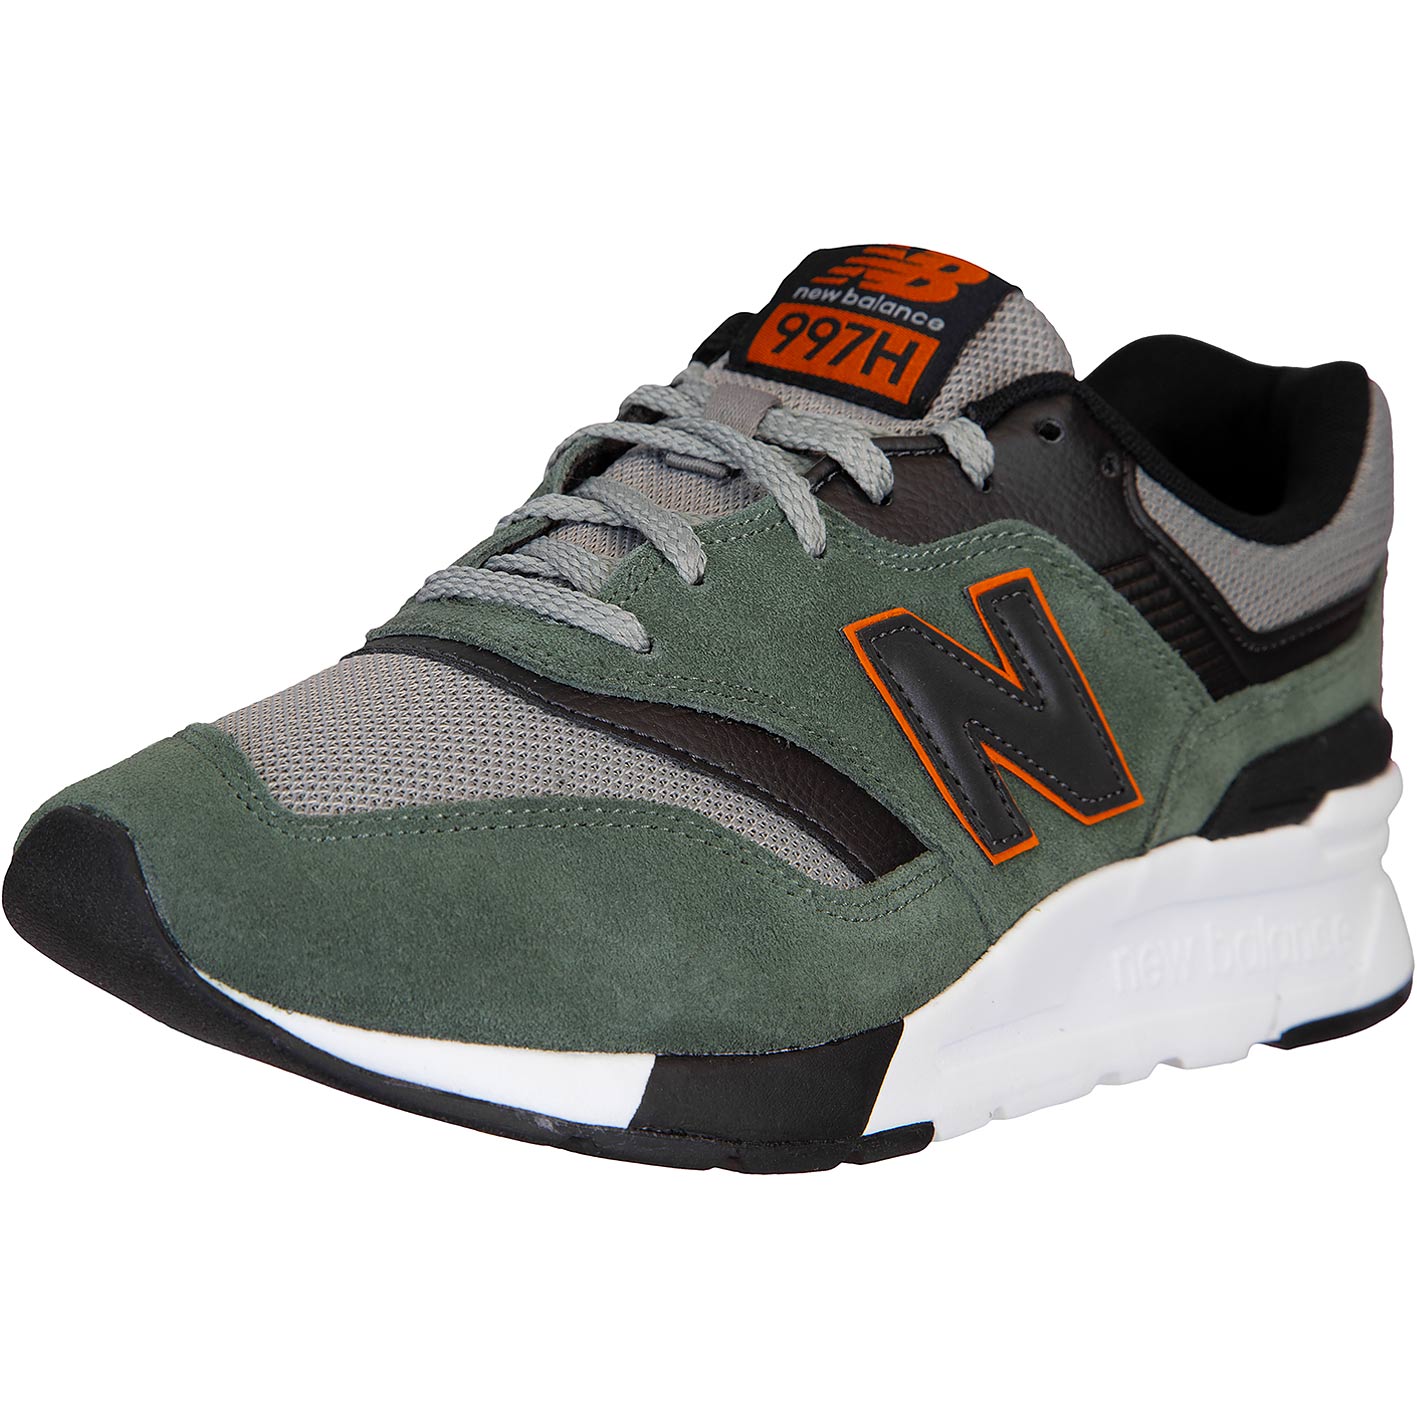 Dubbelzinnig Omdat verrassing ☆ New Balance 997H Sneaker Schuhe grün/rot - hier bestellen!